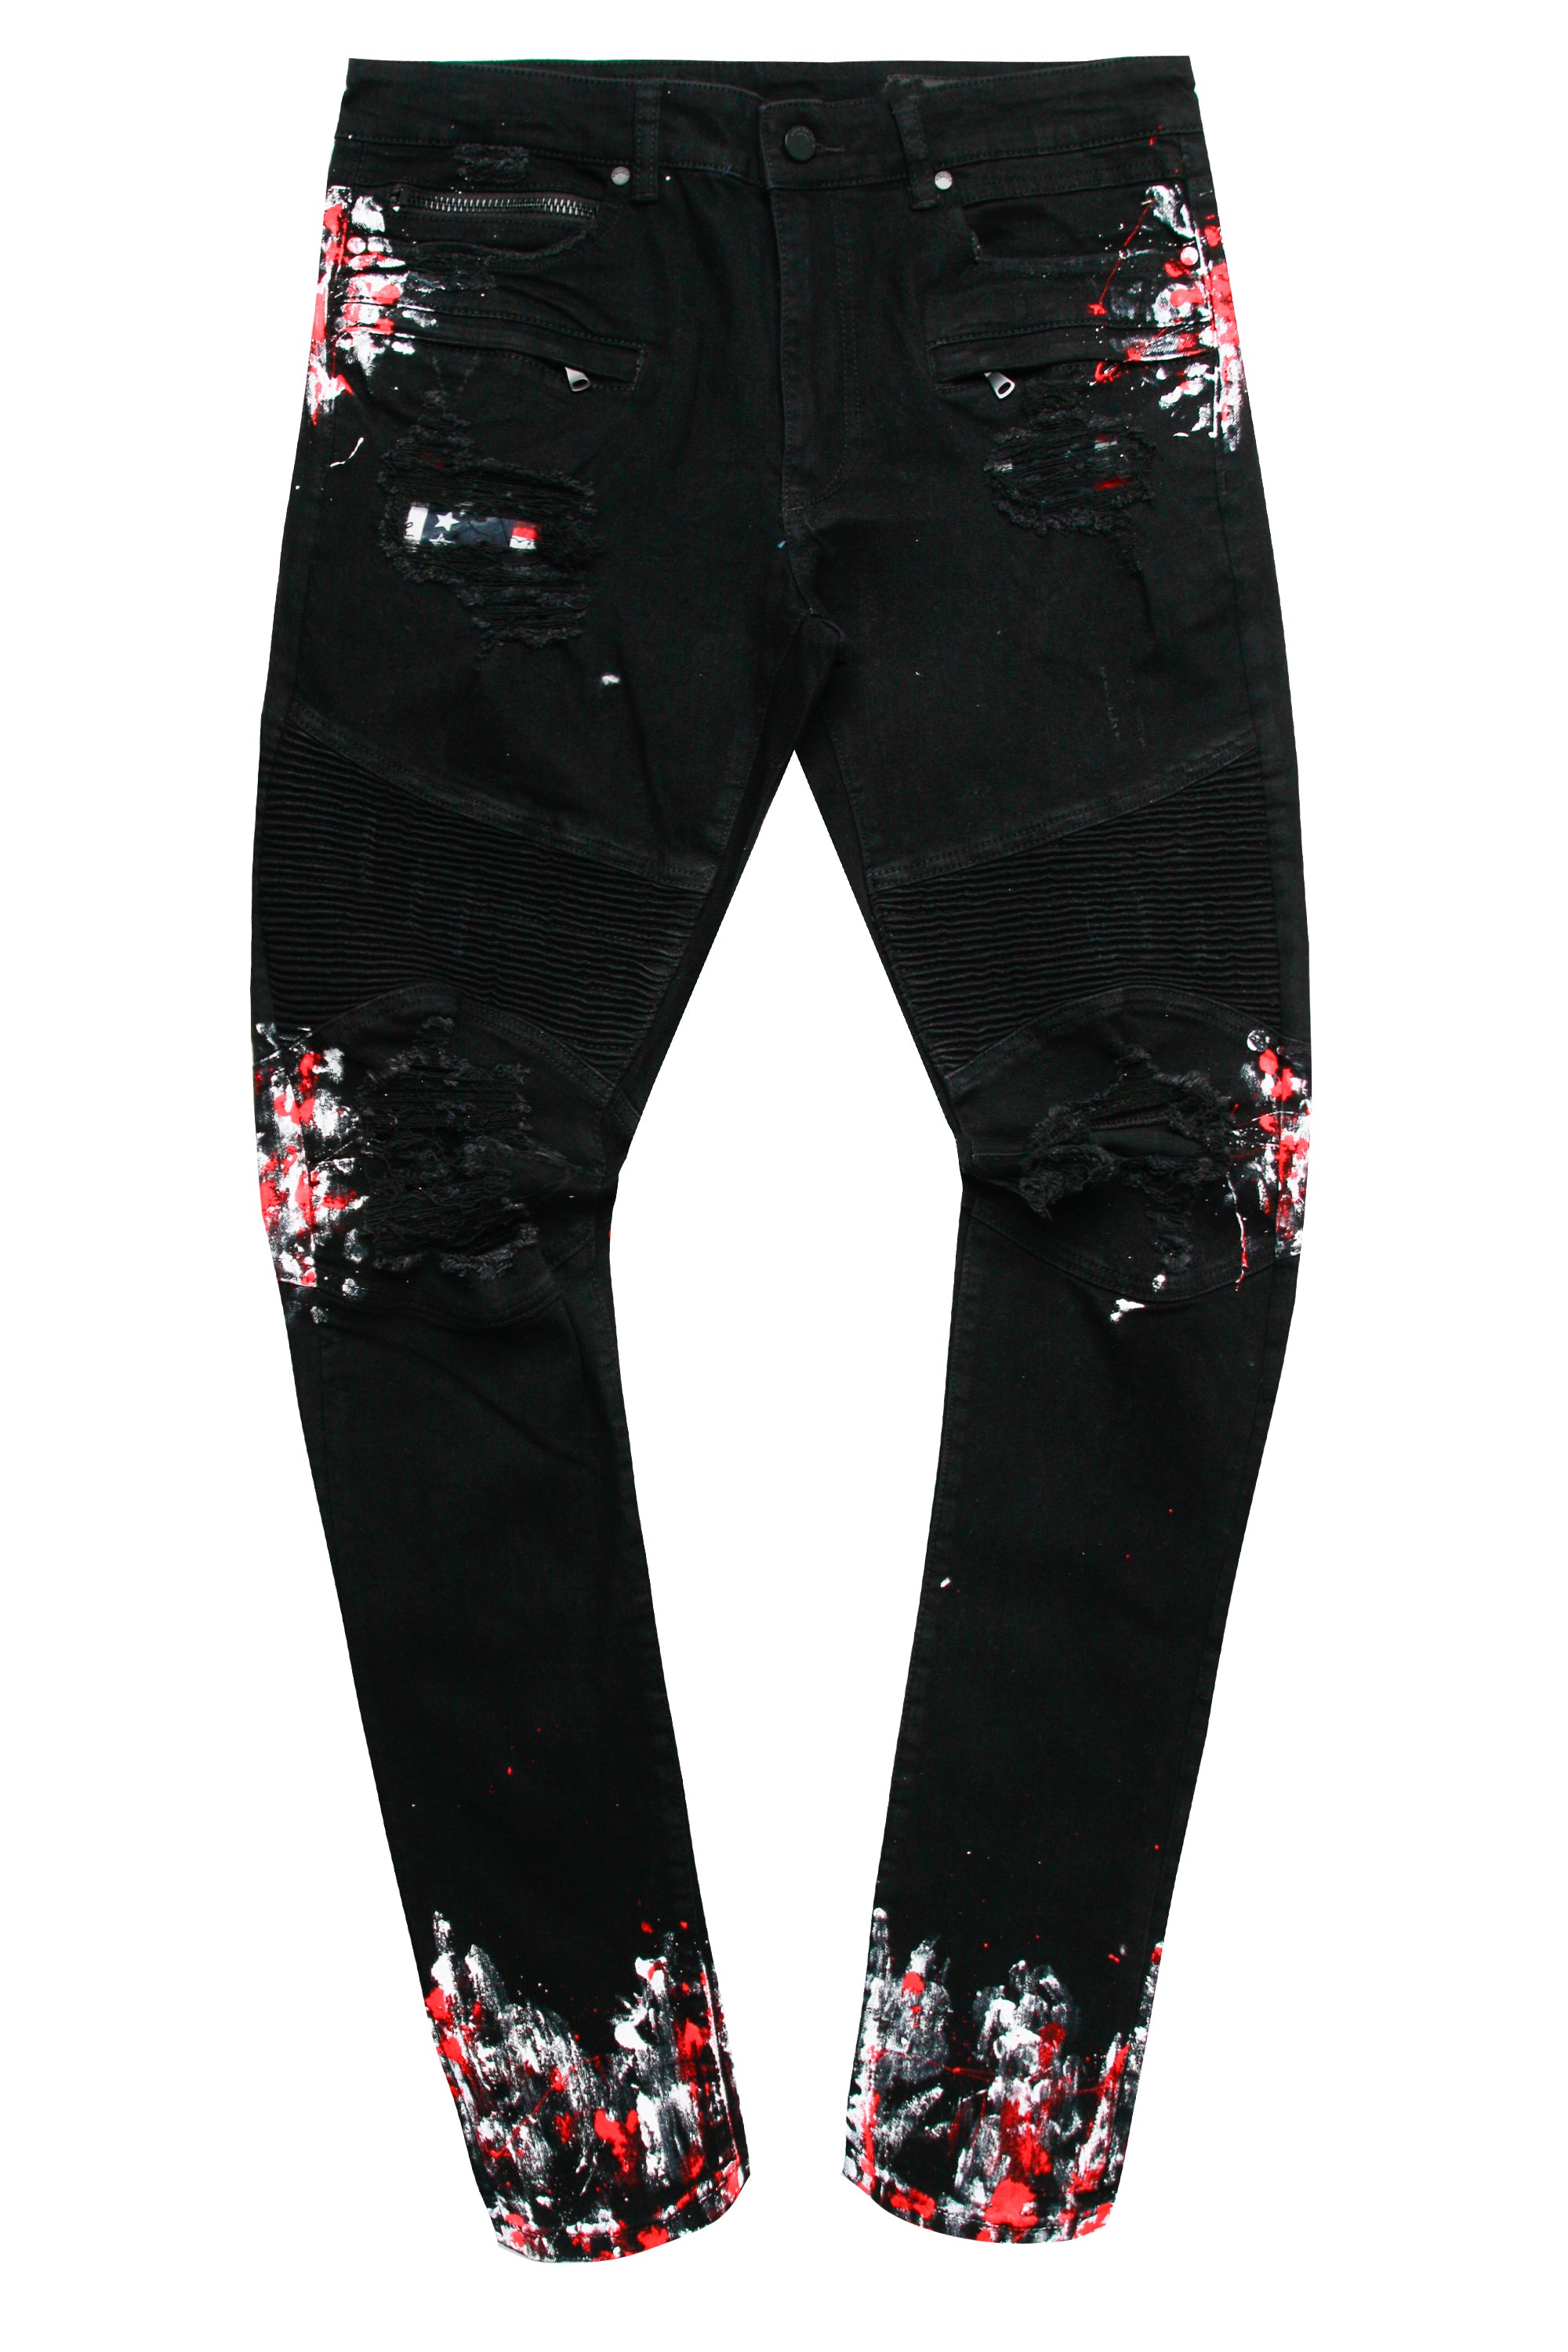 ROCKSTAR Jeans Mens Size 40 Button Fly Graffiti Paint Spatter Urban Biker  Rocker